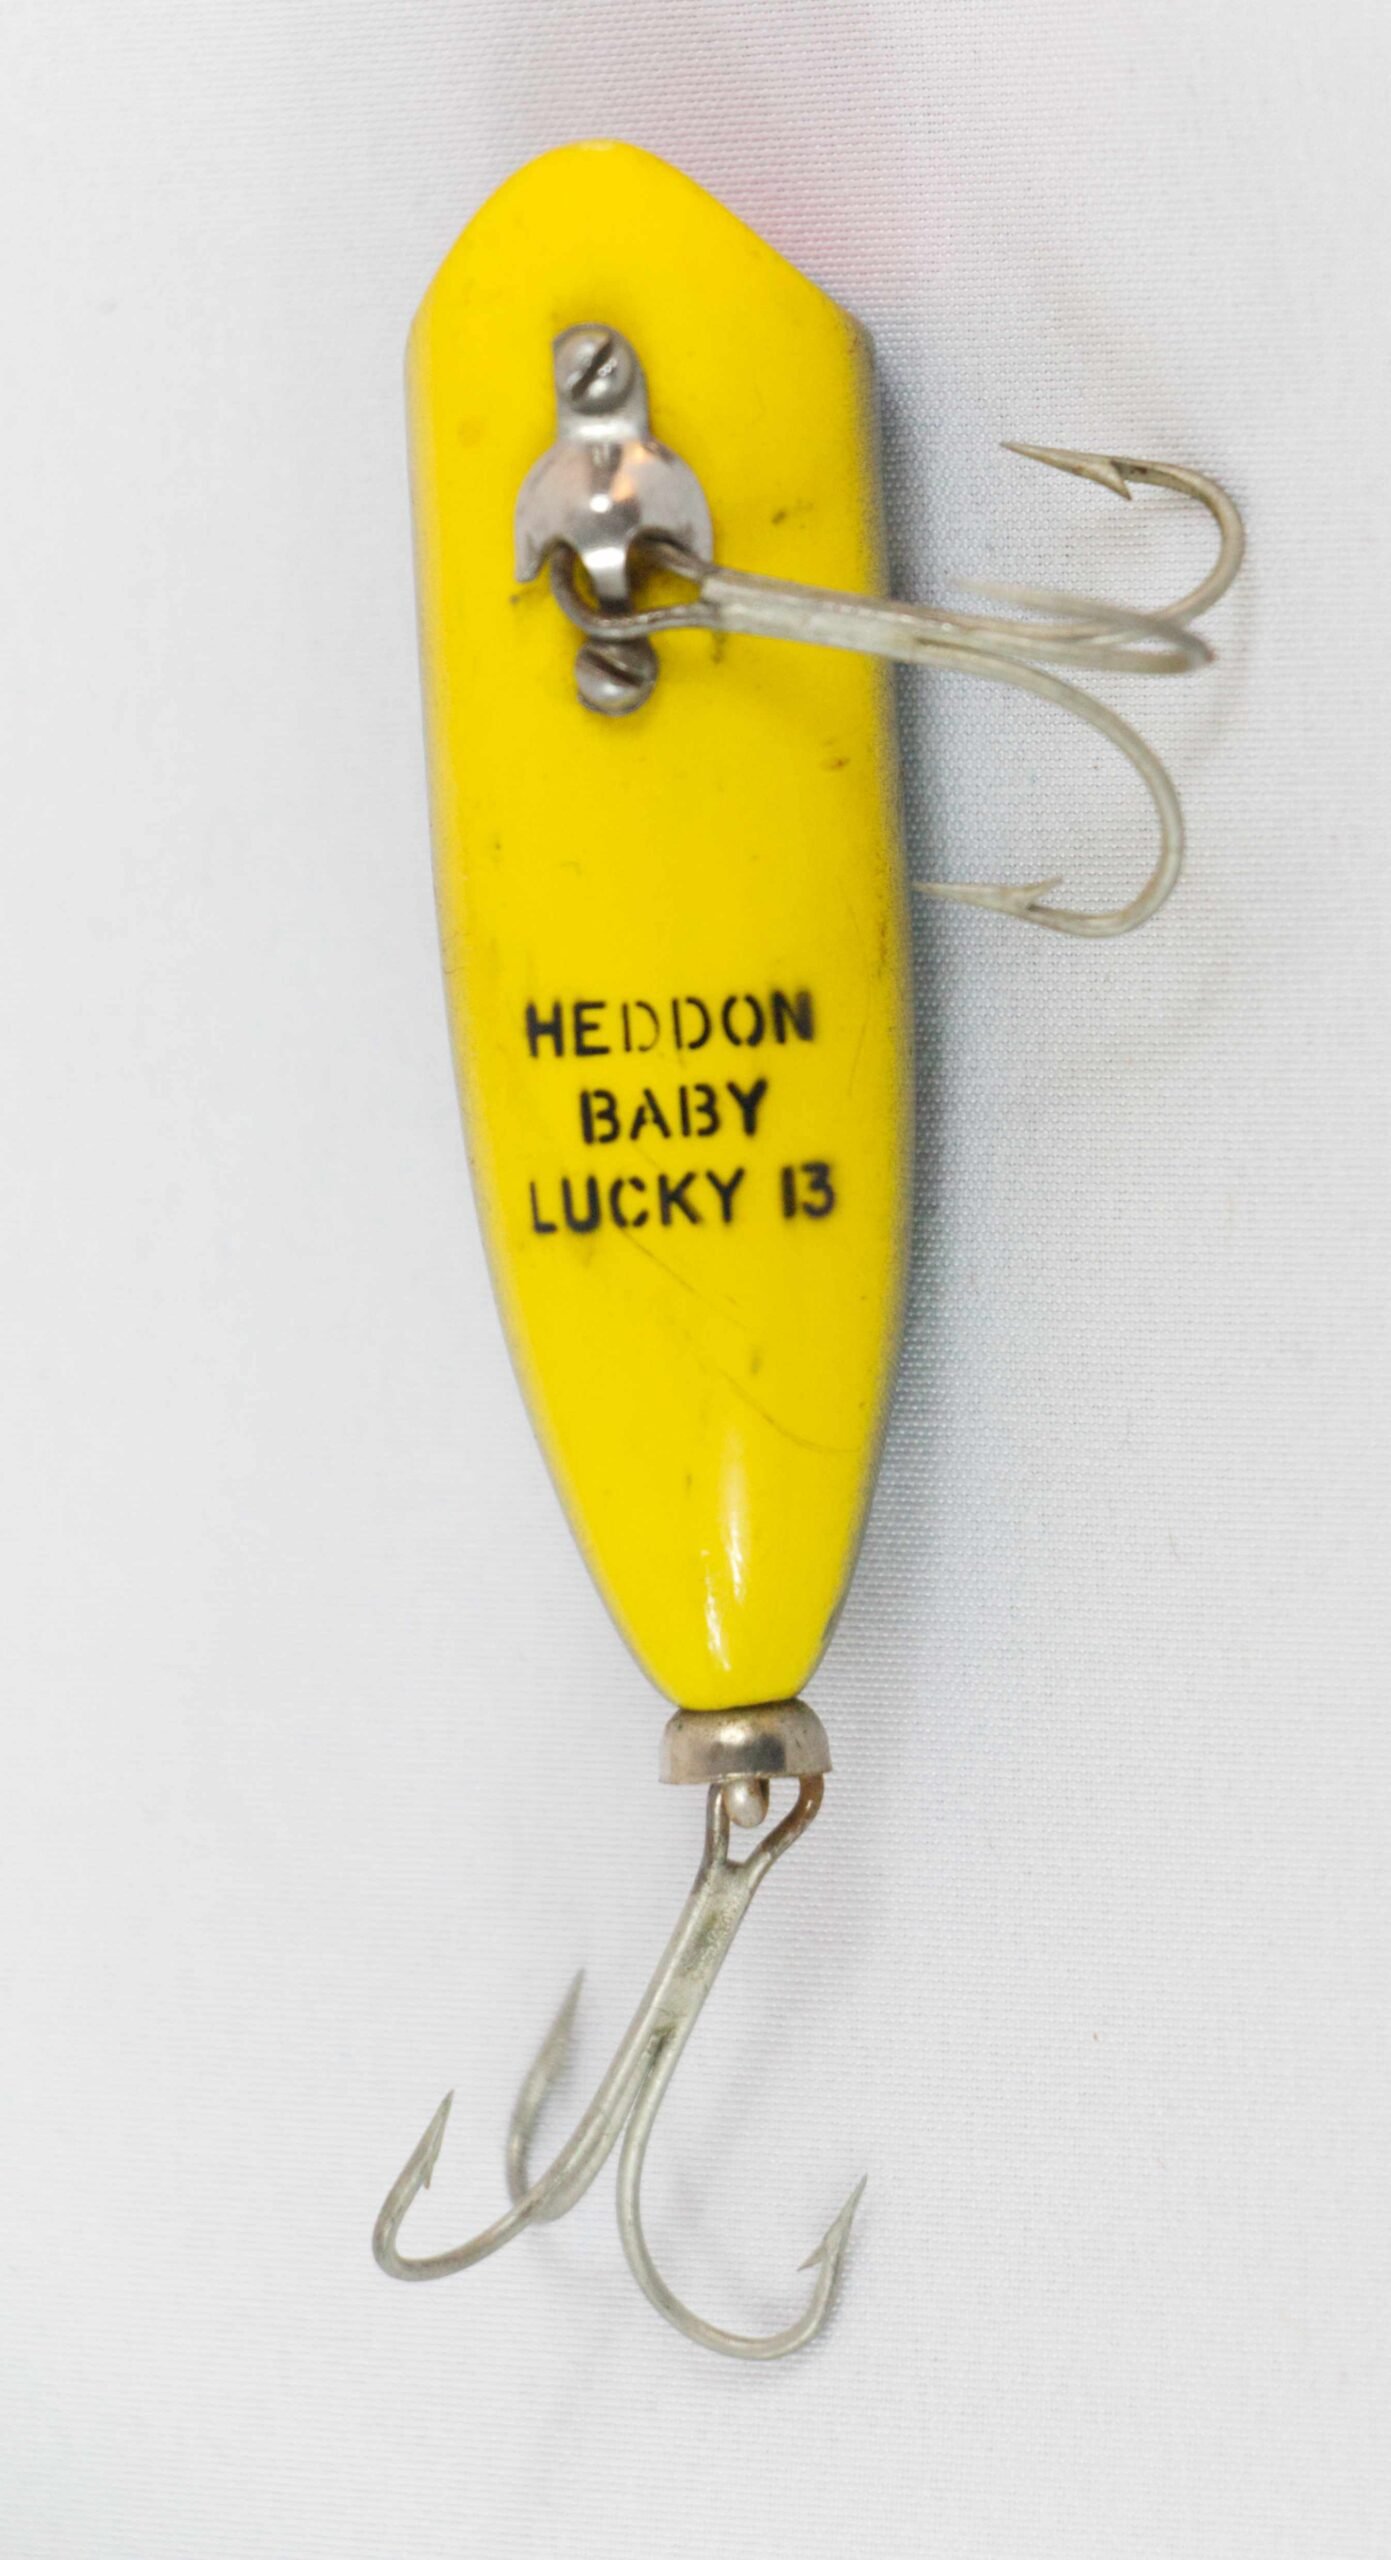 Heddon Baby Lucky 13 Lure